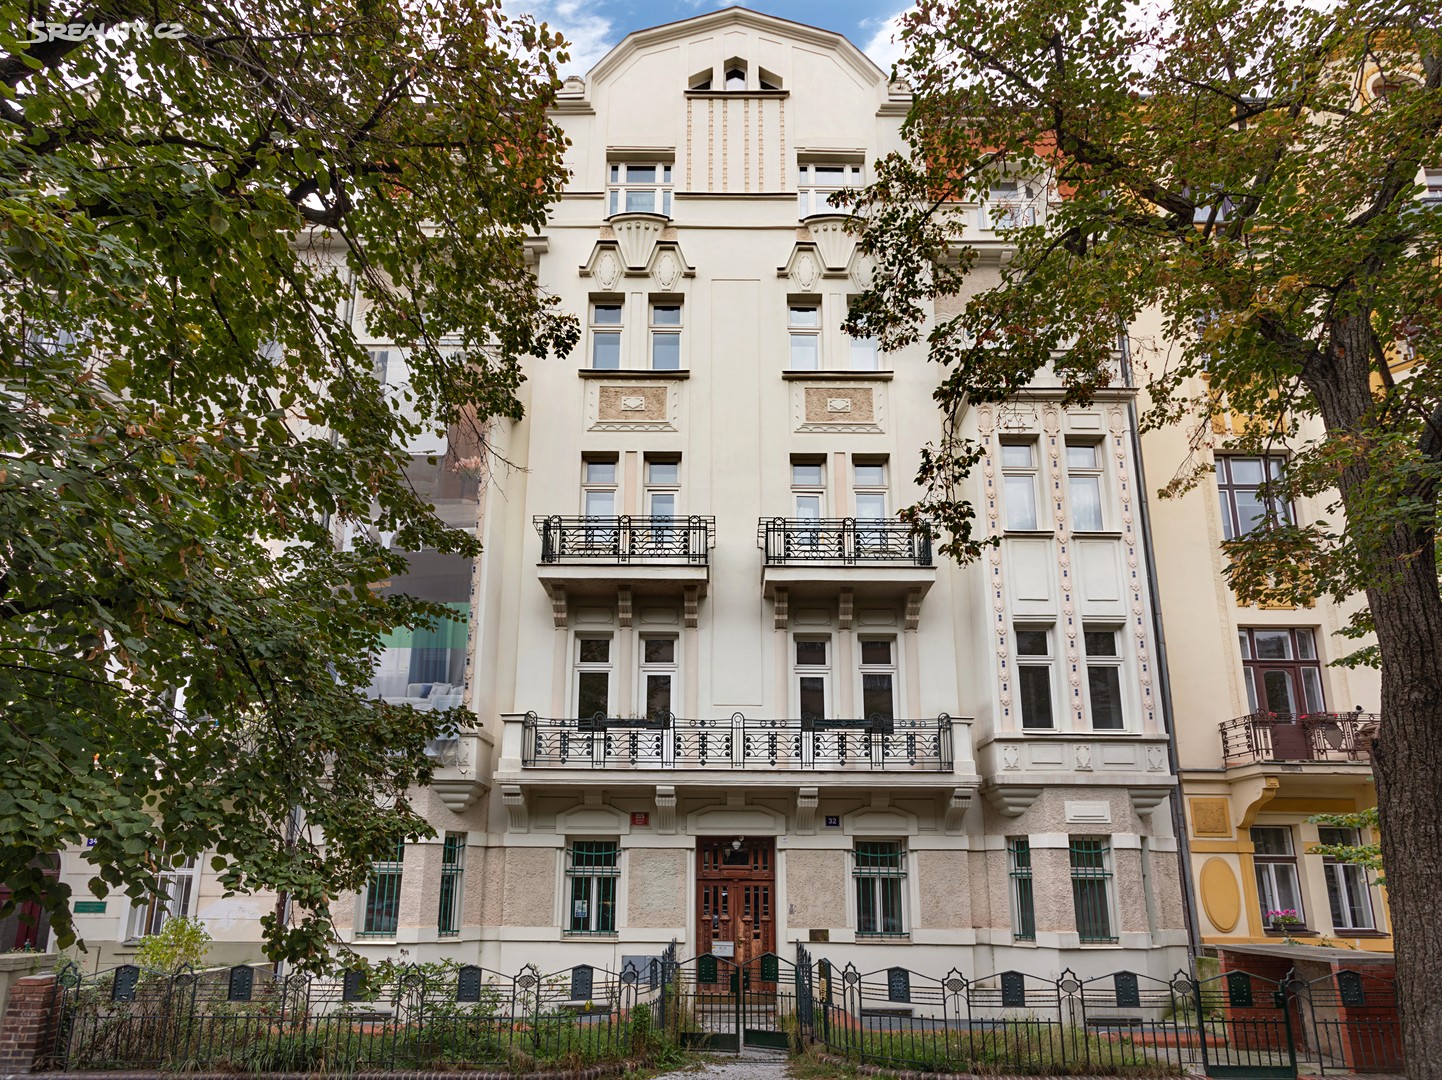 Pronájem bytu 1+kk 31 m², Ovenecká, Praha 7 - Bubeneč